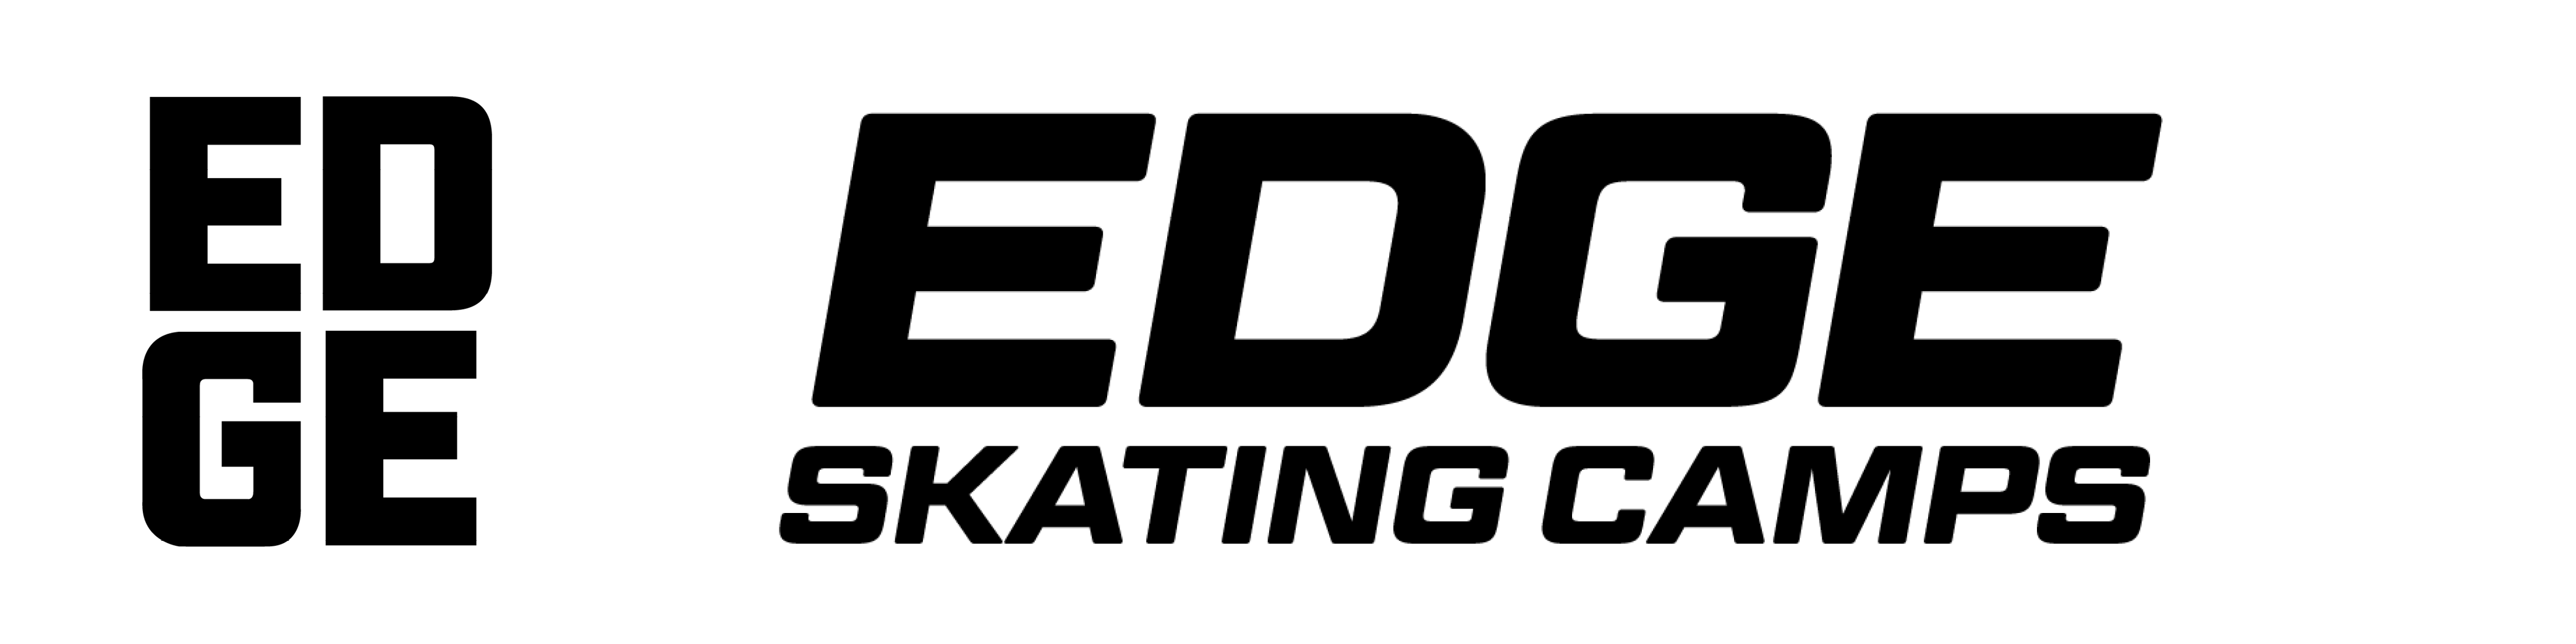 EDGE Skating Camps Logo Black